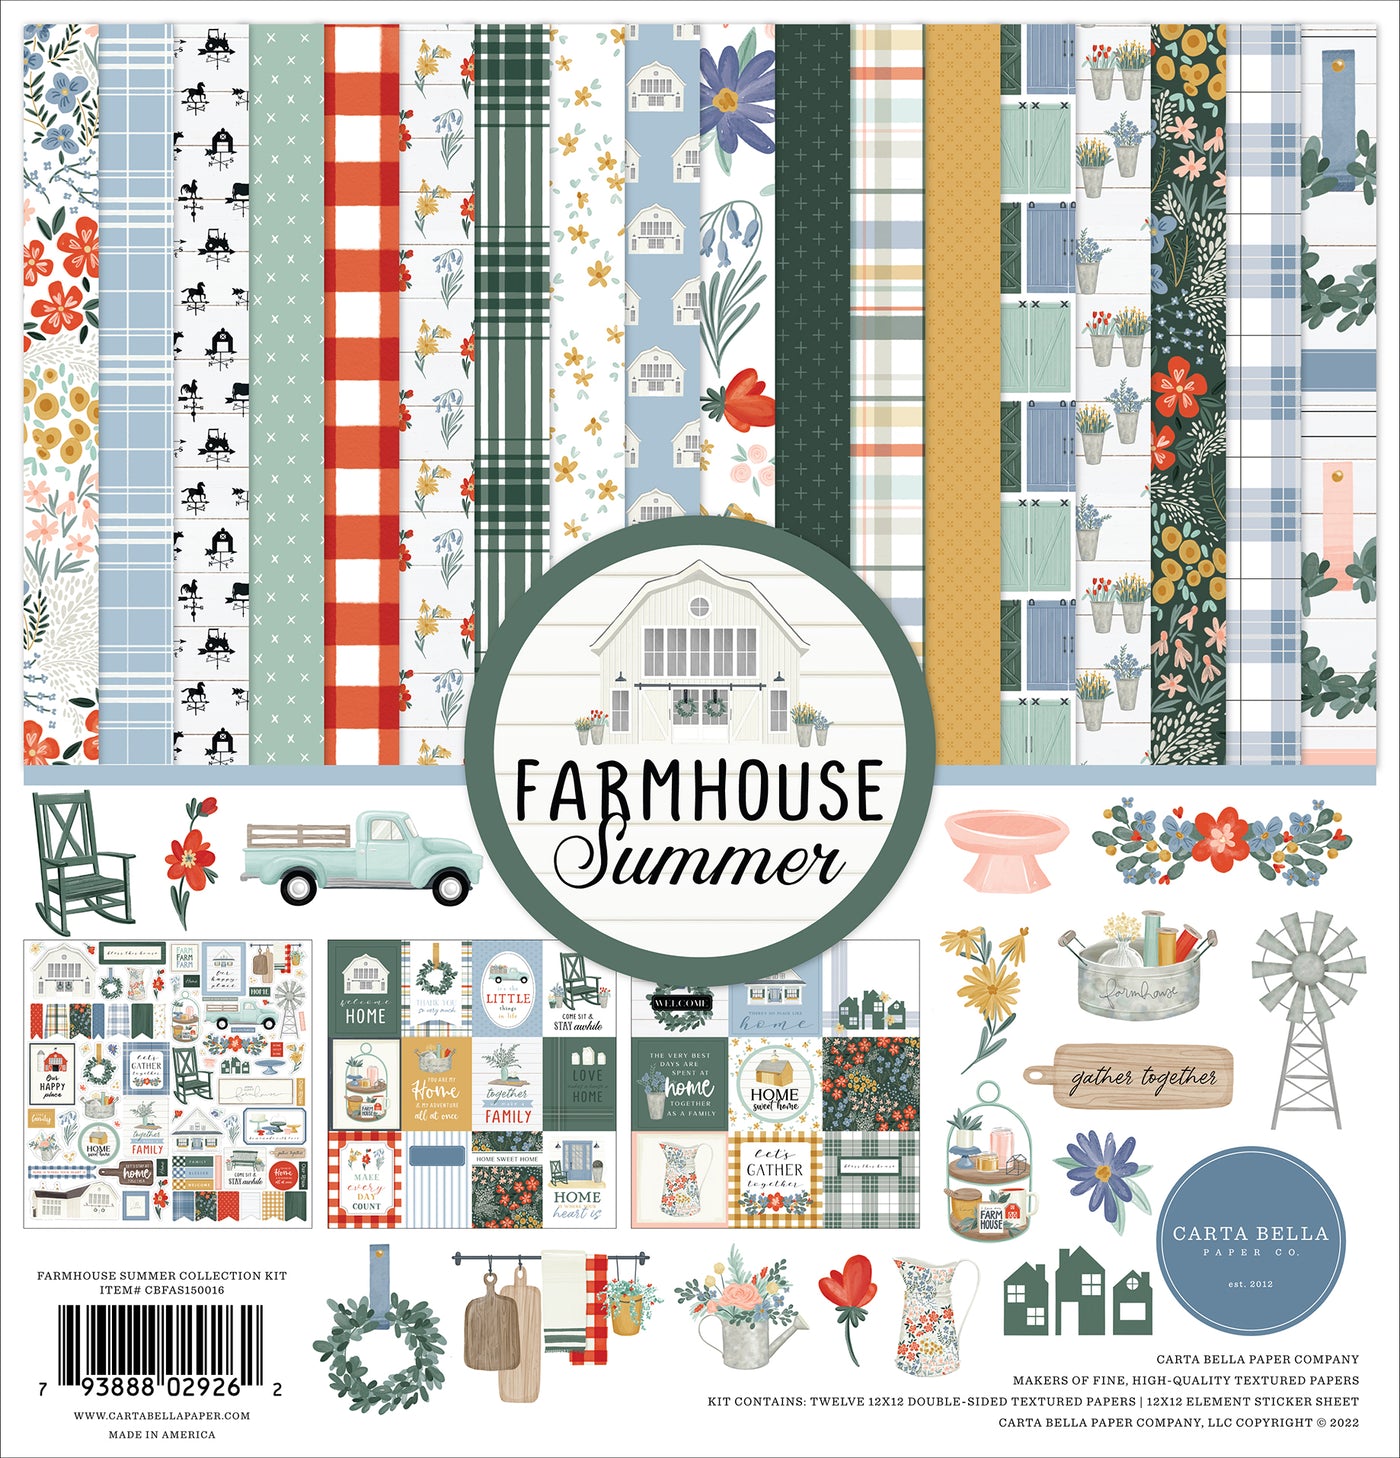 FARMHOUSE SUMMER 12x12 Collection Kit - Carta Bella